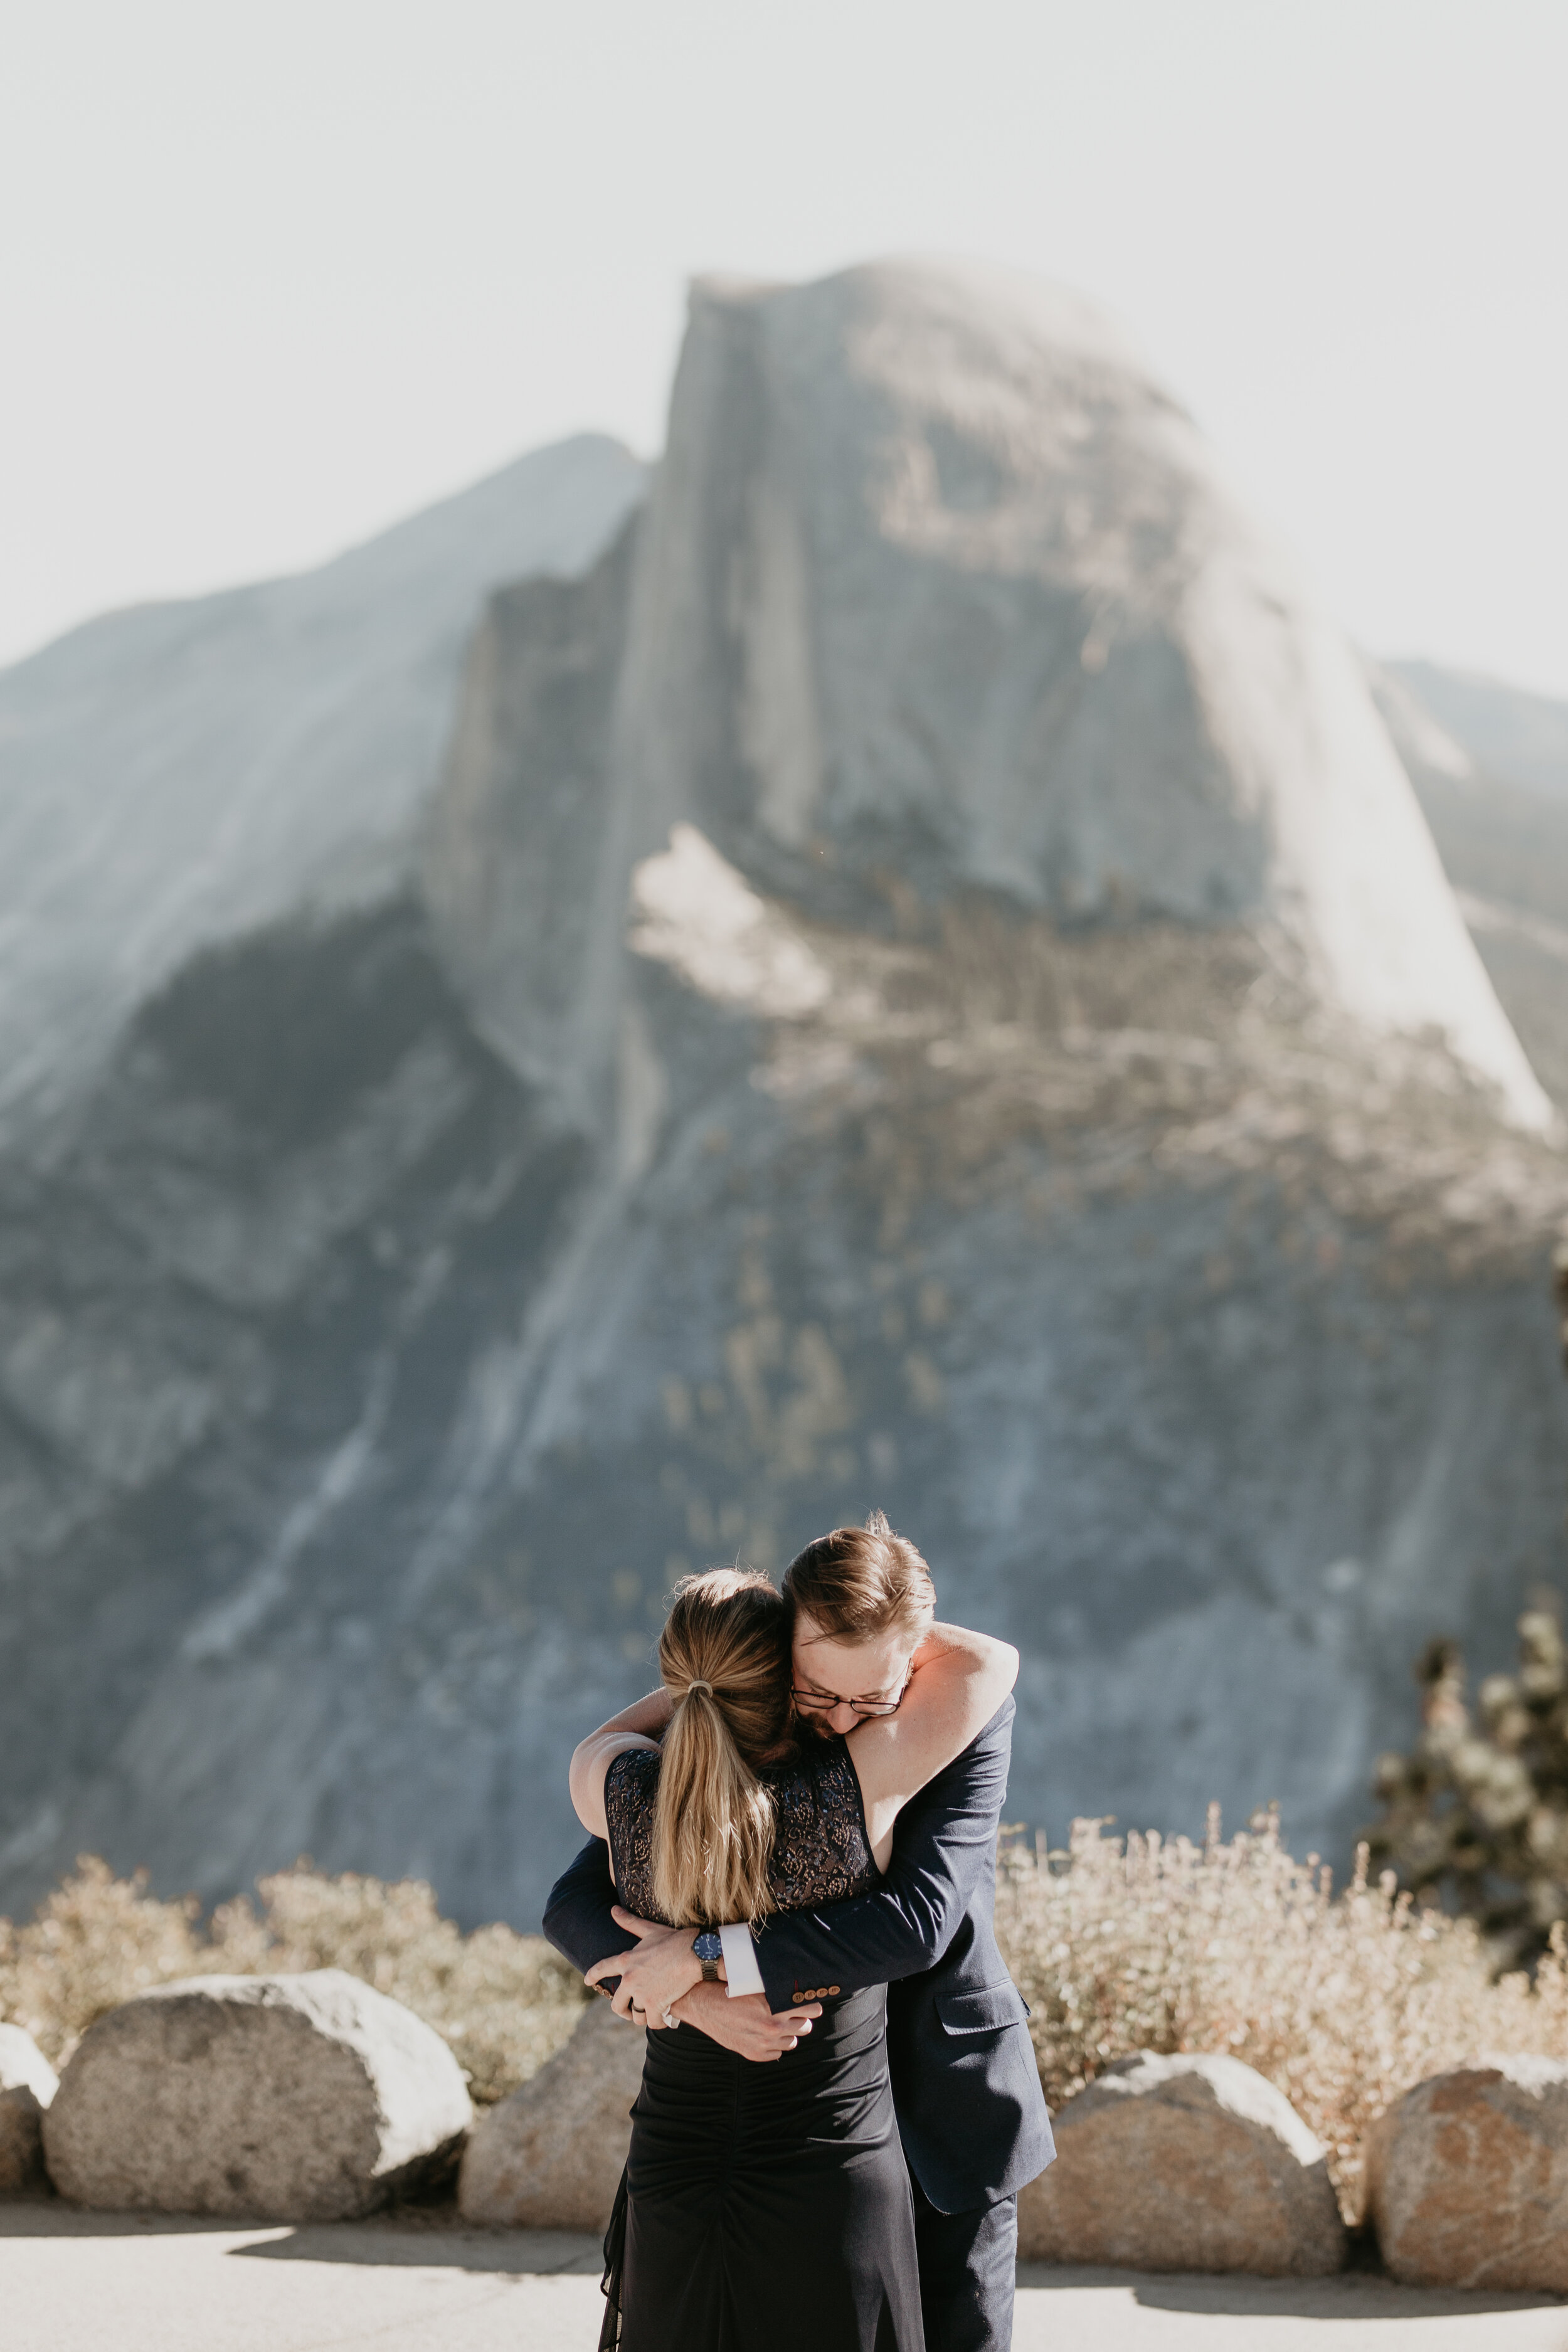 Nicole-Daacke-Photography-yosemite-national-park-elopement-photography-adventure-elopement-in-yosemite-taft-point-sunset-elopement-photographs-california-intimate-destination-wedding-in-yosemite-national-park-6527.jpg